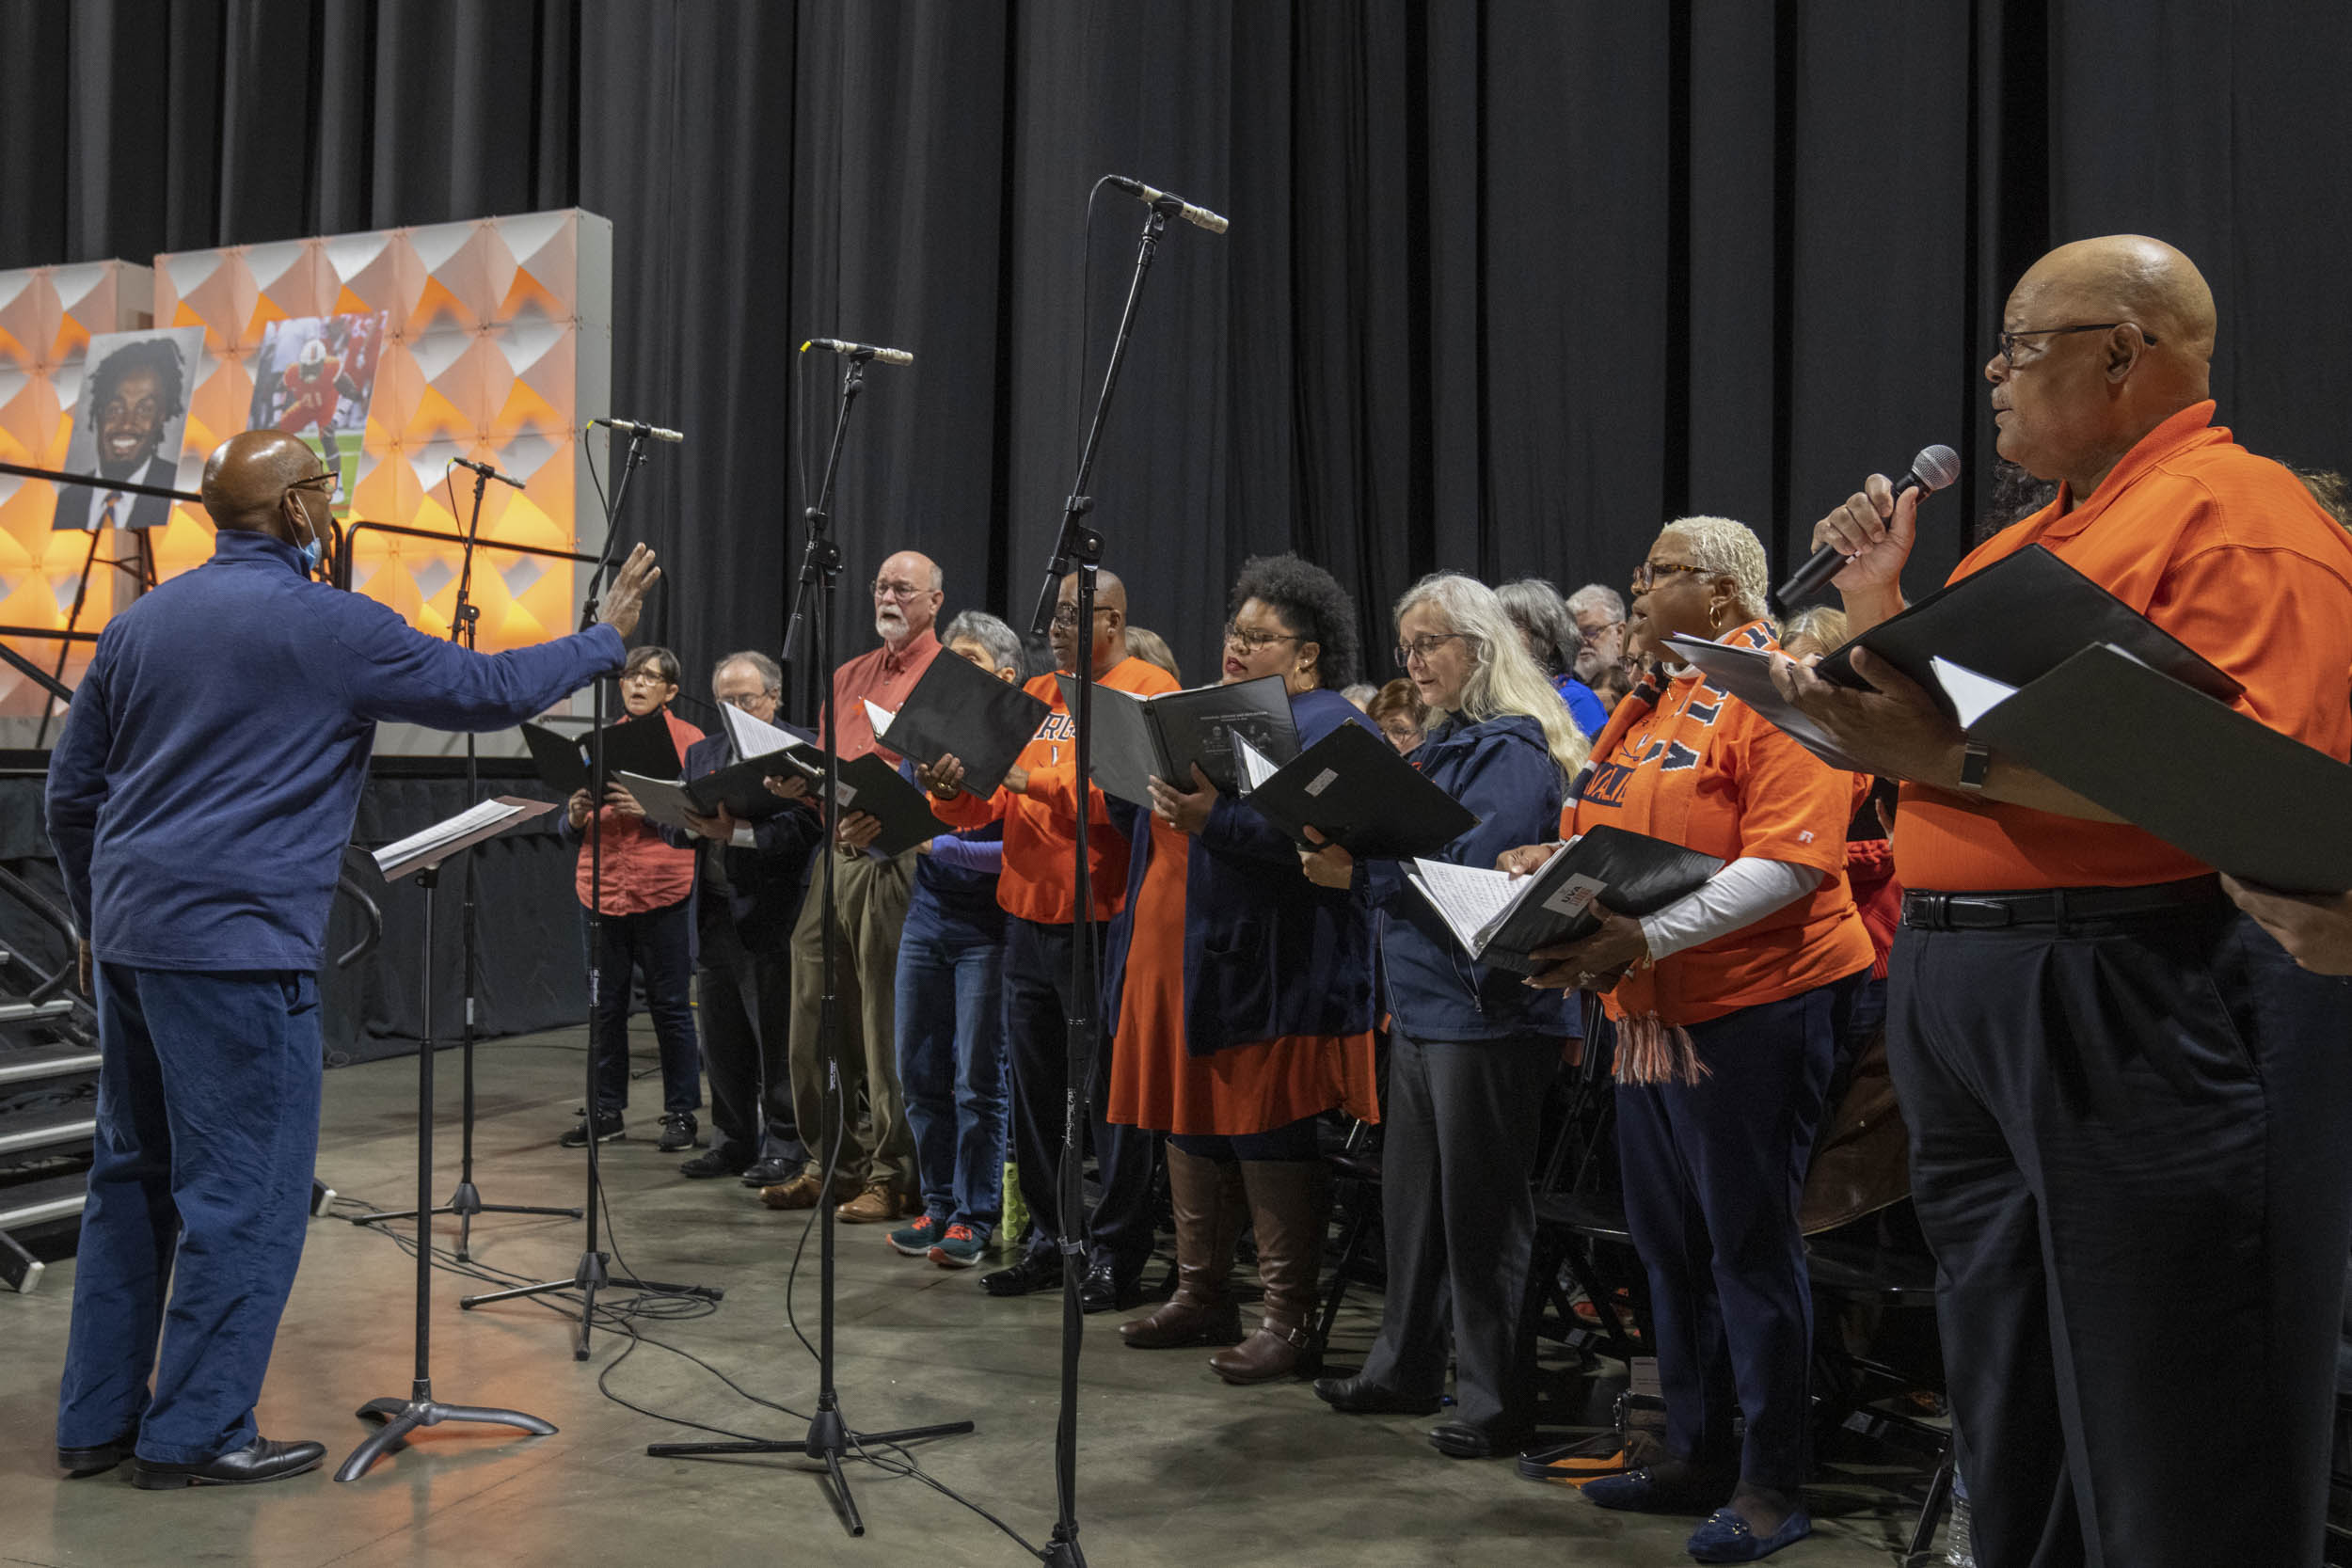 Choir singing at the memorial service